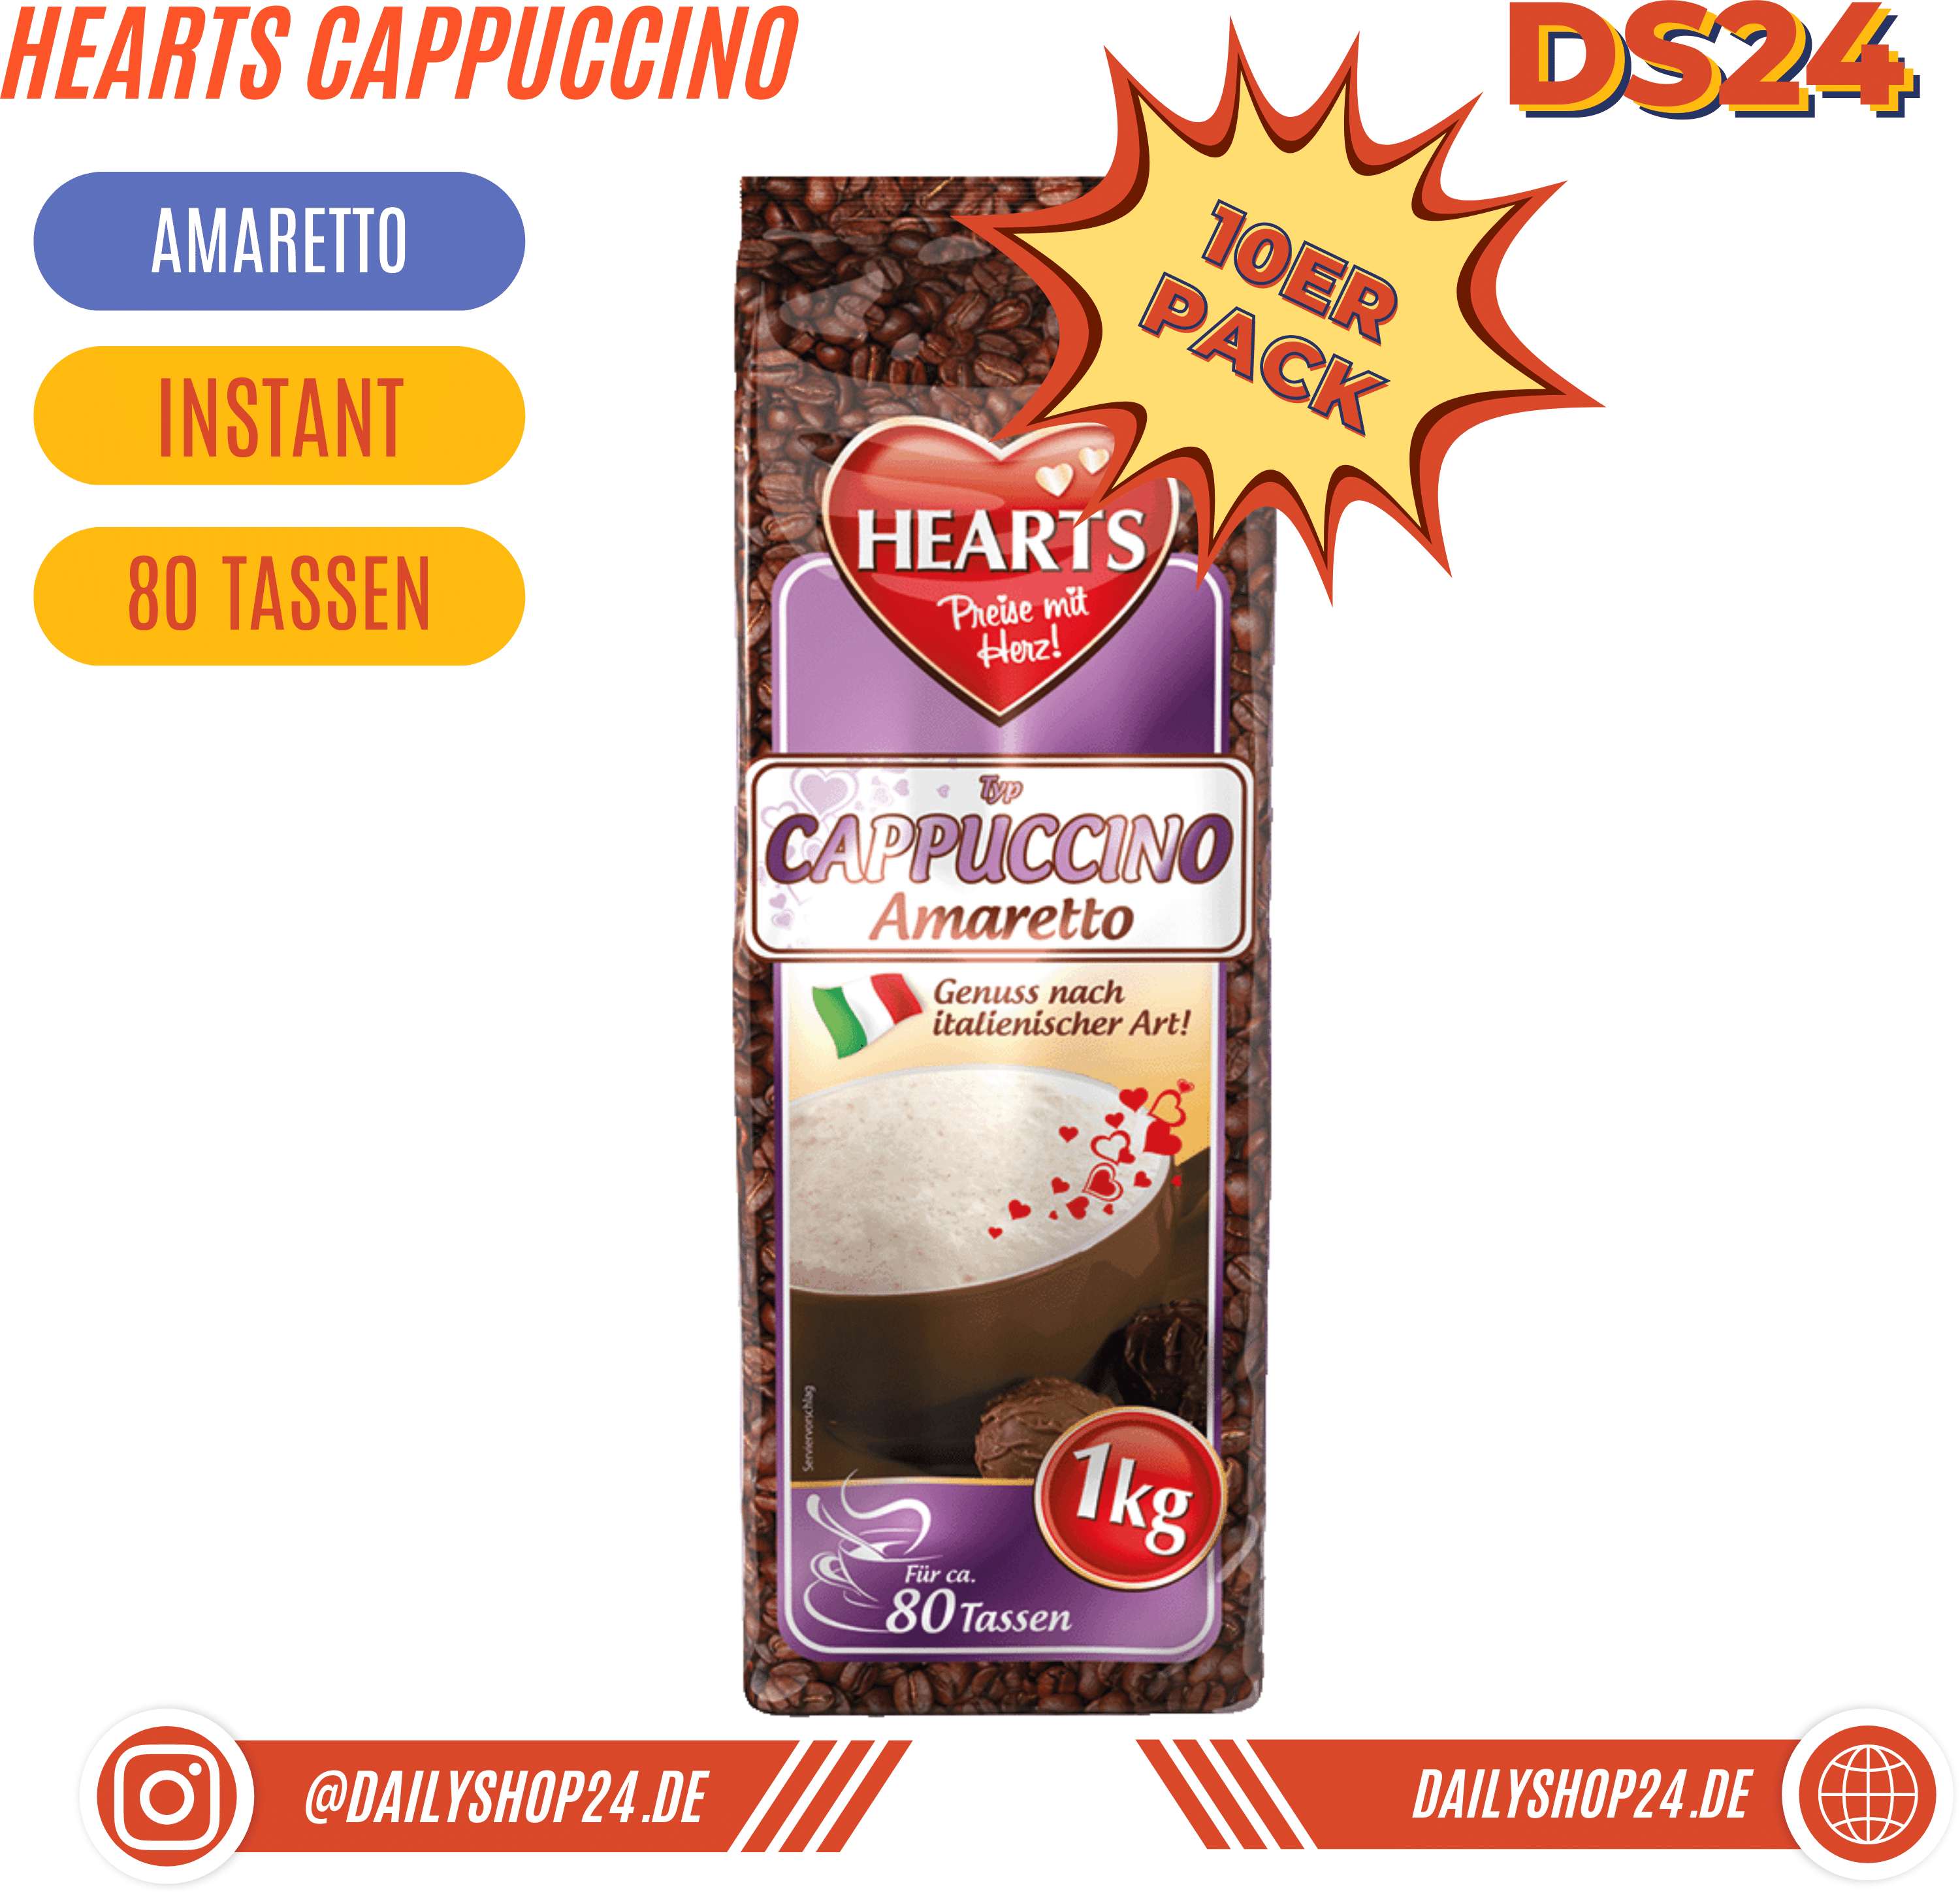 HEARTS Cappuccino - 10 Stück Vorteilspack / Cappuccino Amaretto